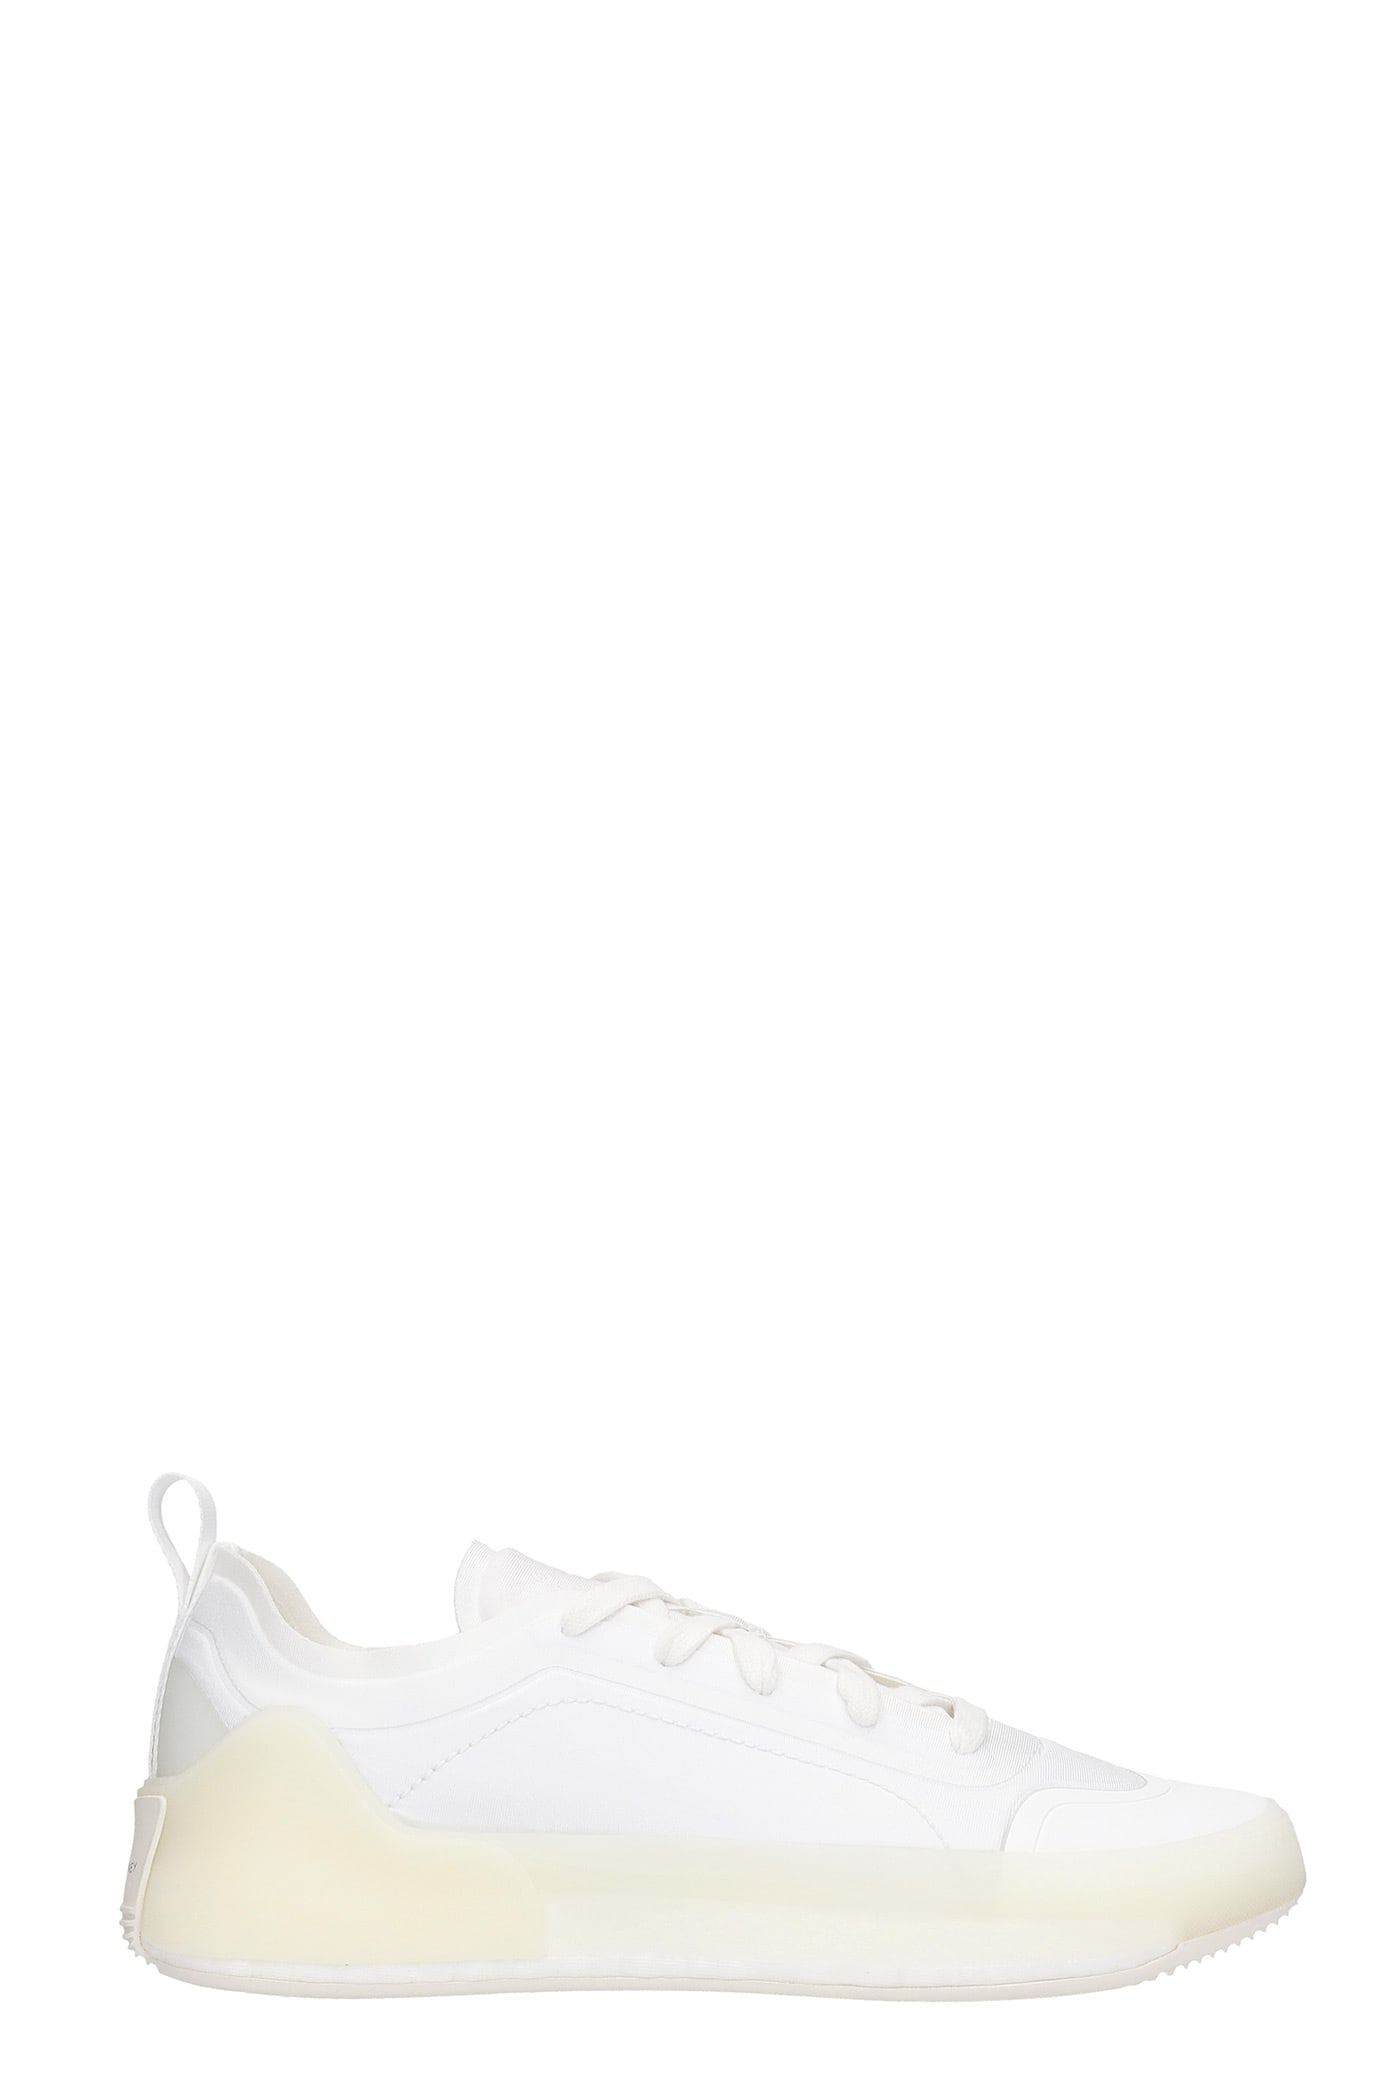 Adidas by Stella McCartney Asmc Treino Sneakers In White Synthetic Fibers